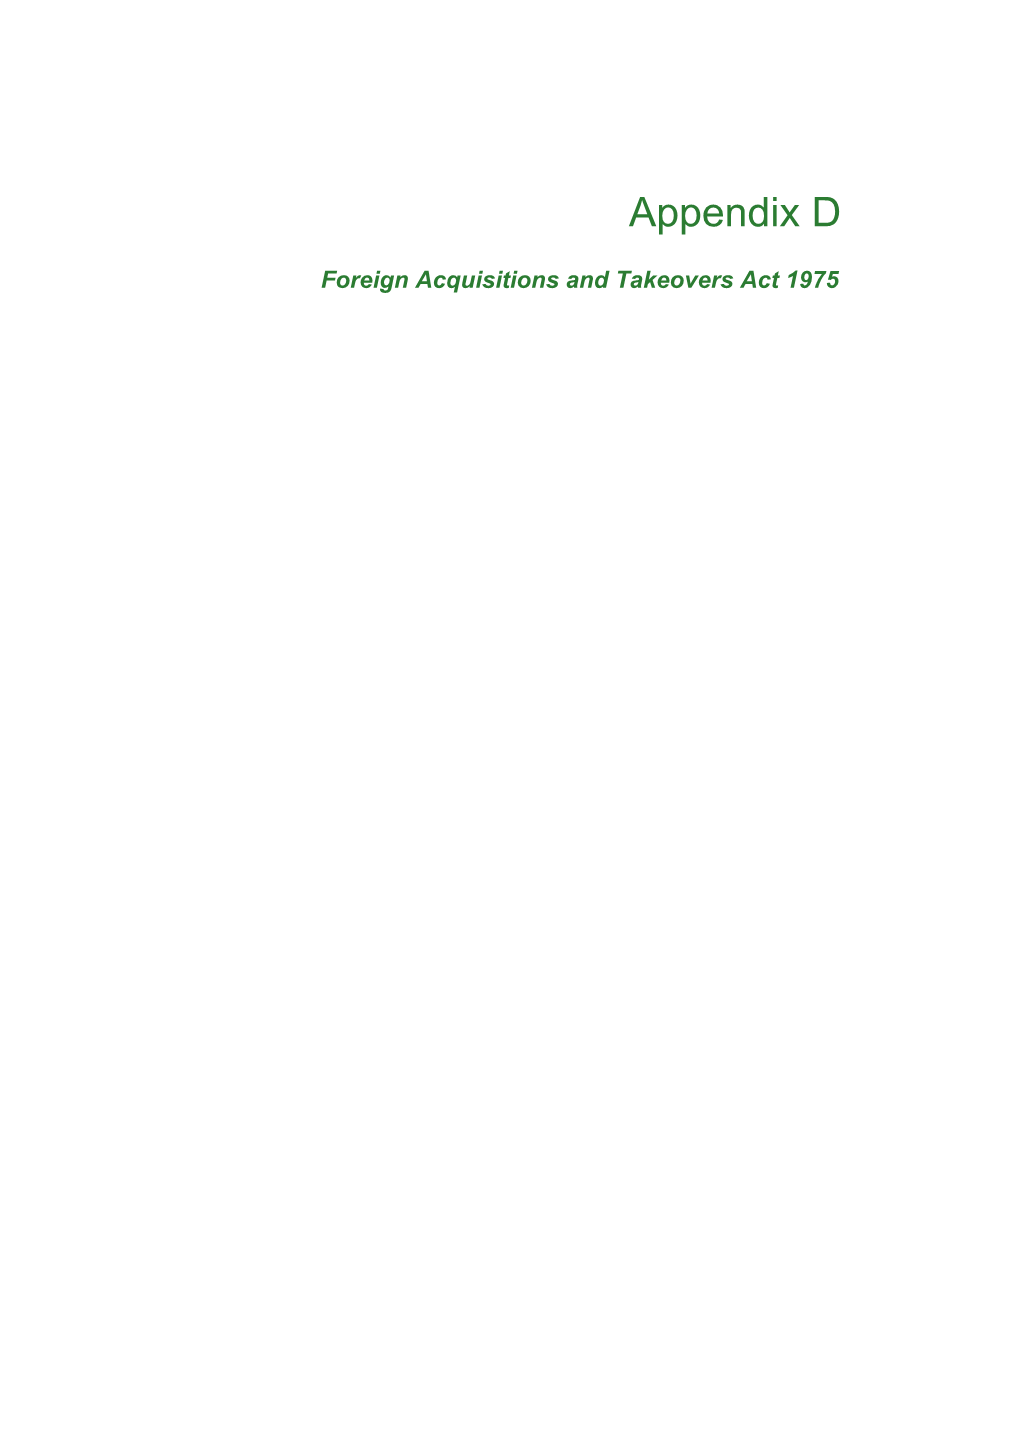 Appendix D - FIRB 2007-08 Annual Reprt